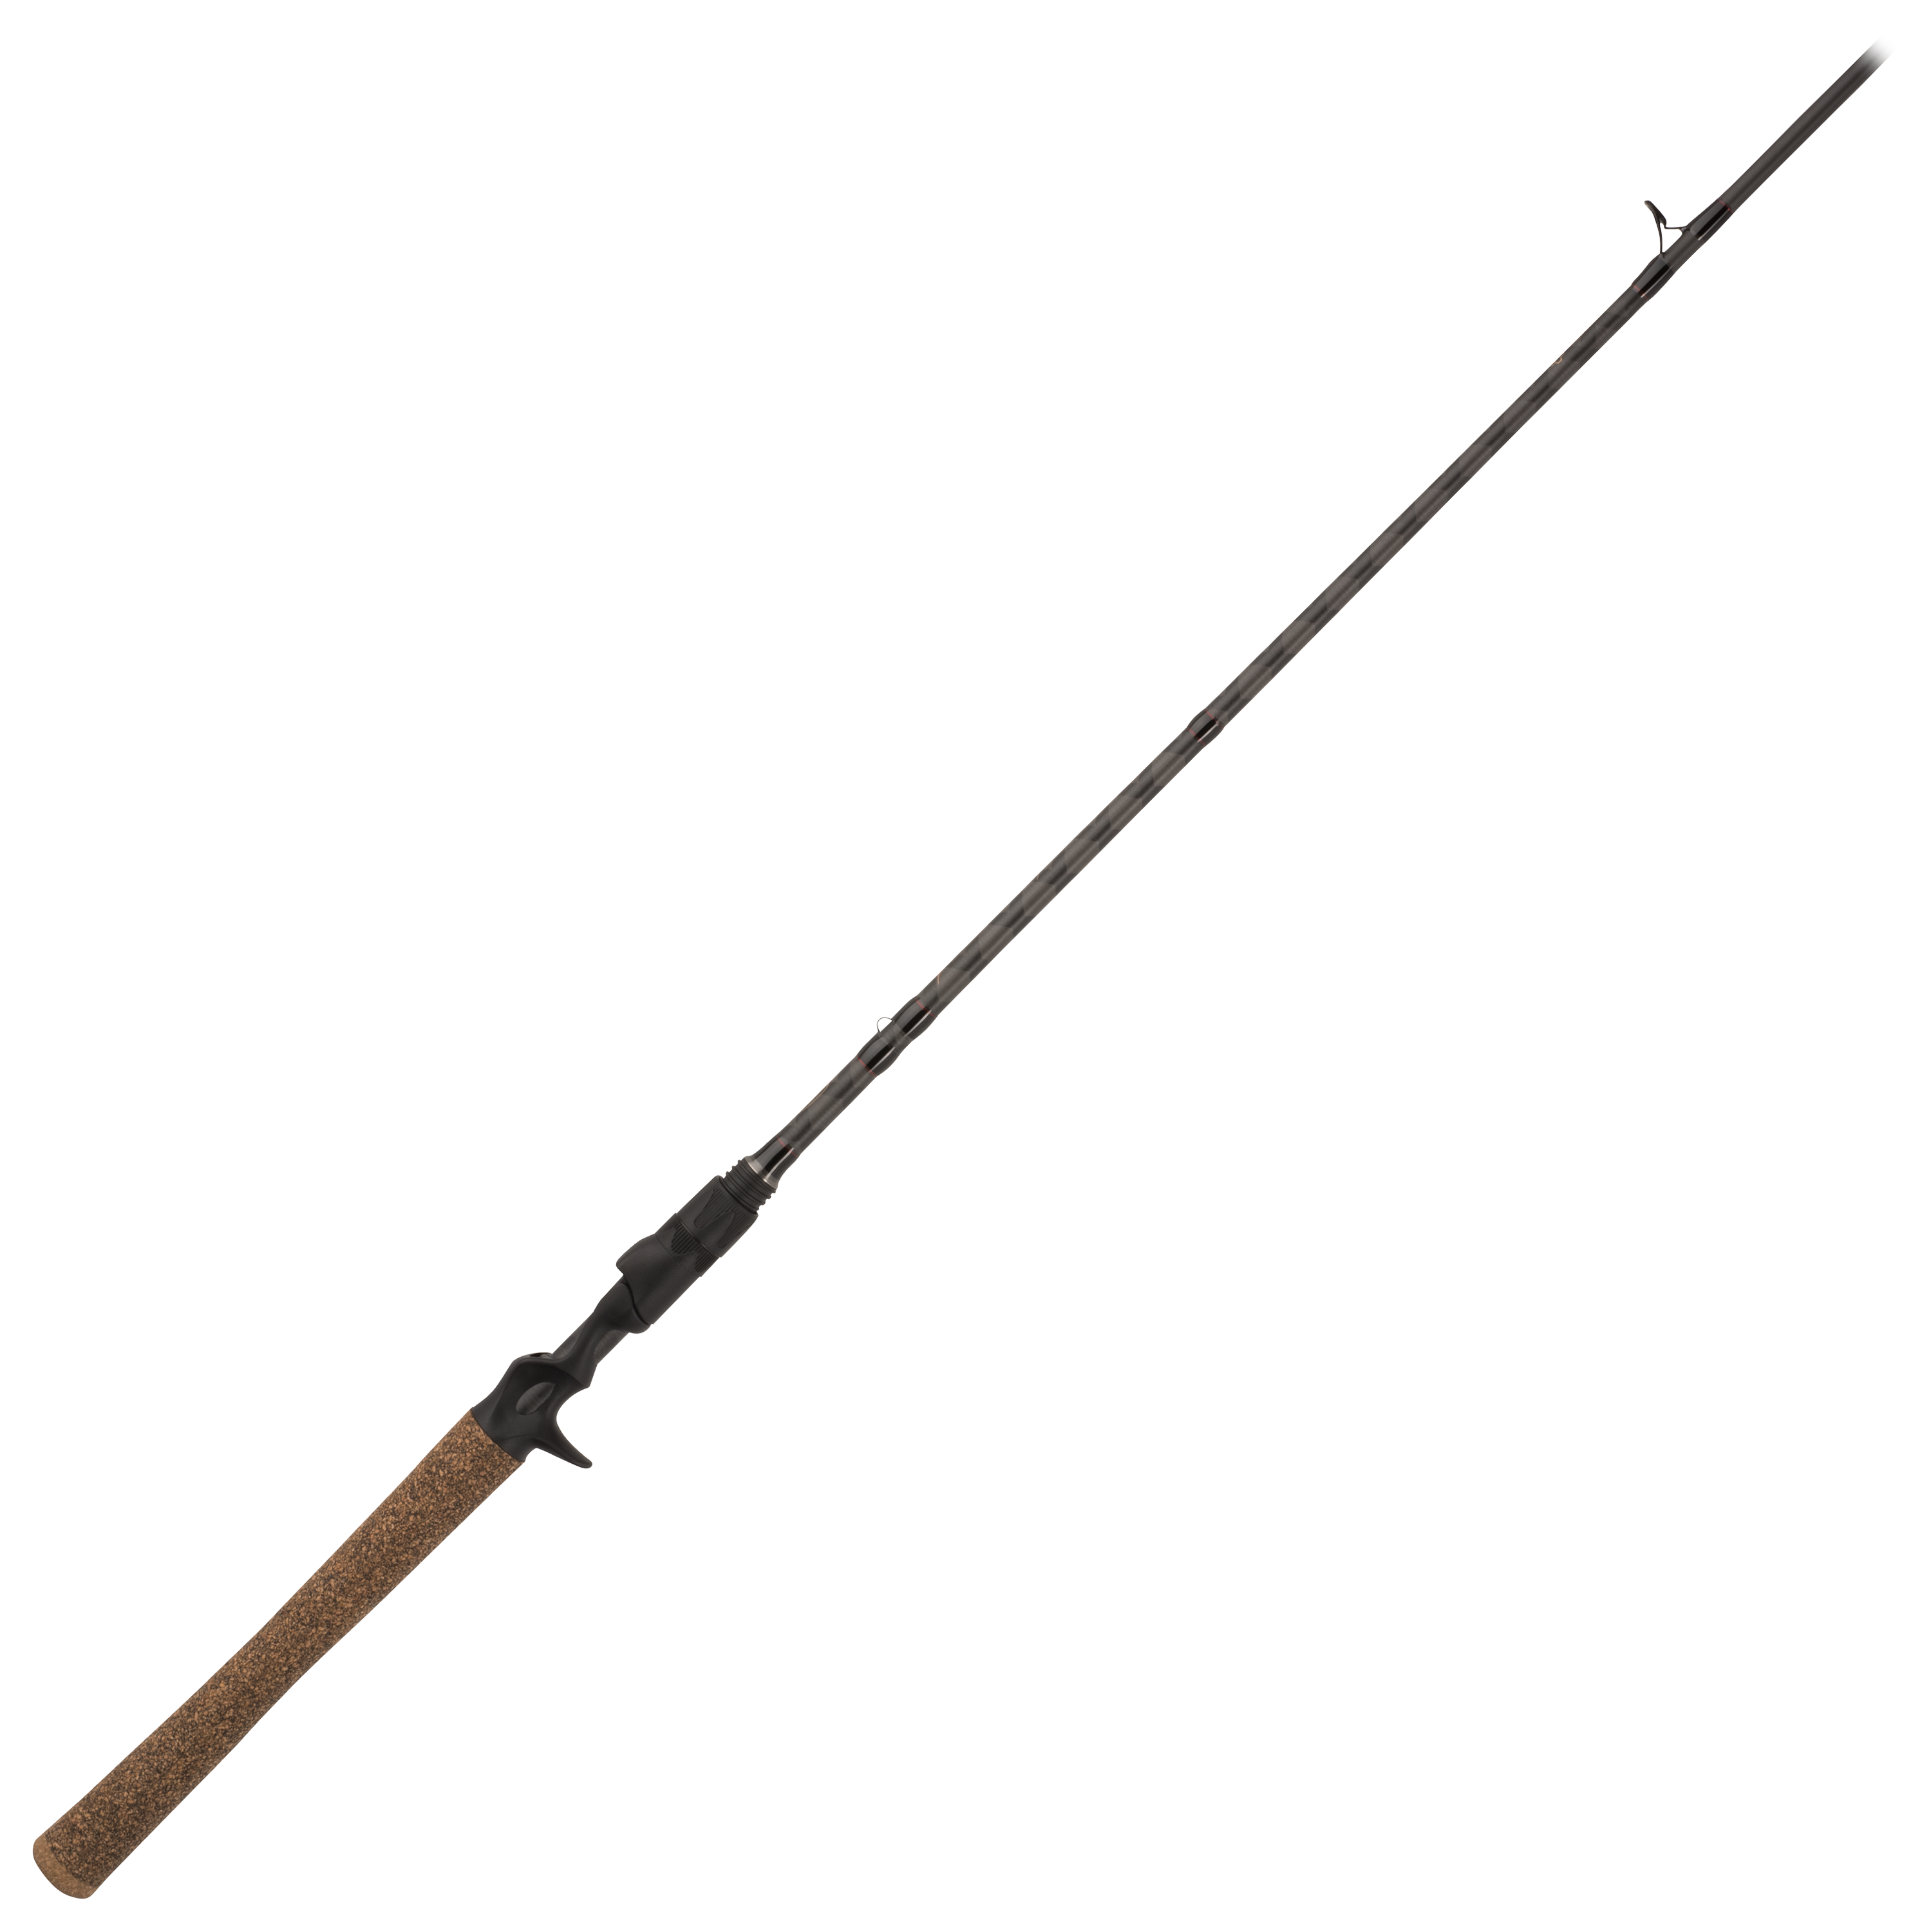 Whuppin Stick WS66MC-2 medium 6'6 spinning rod